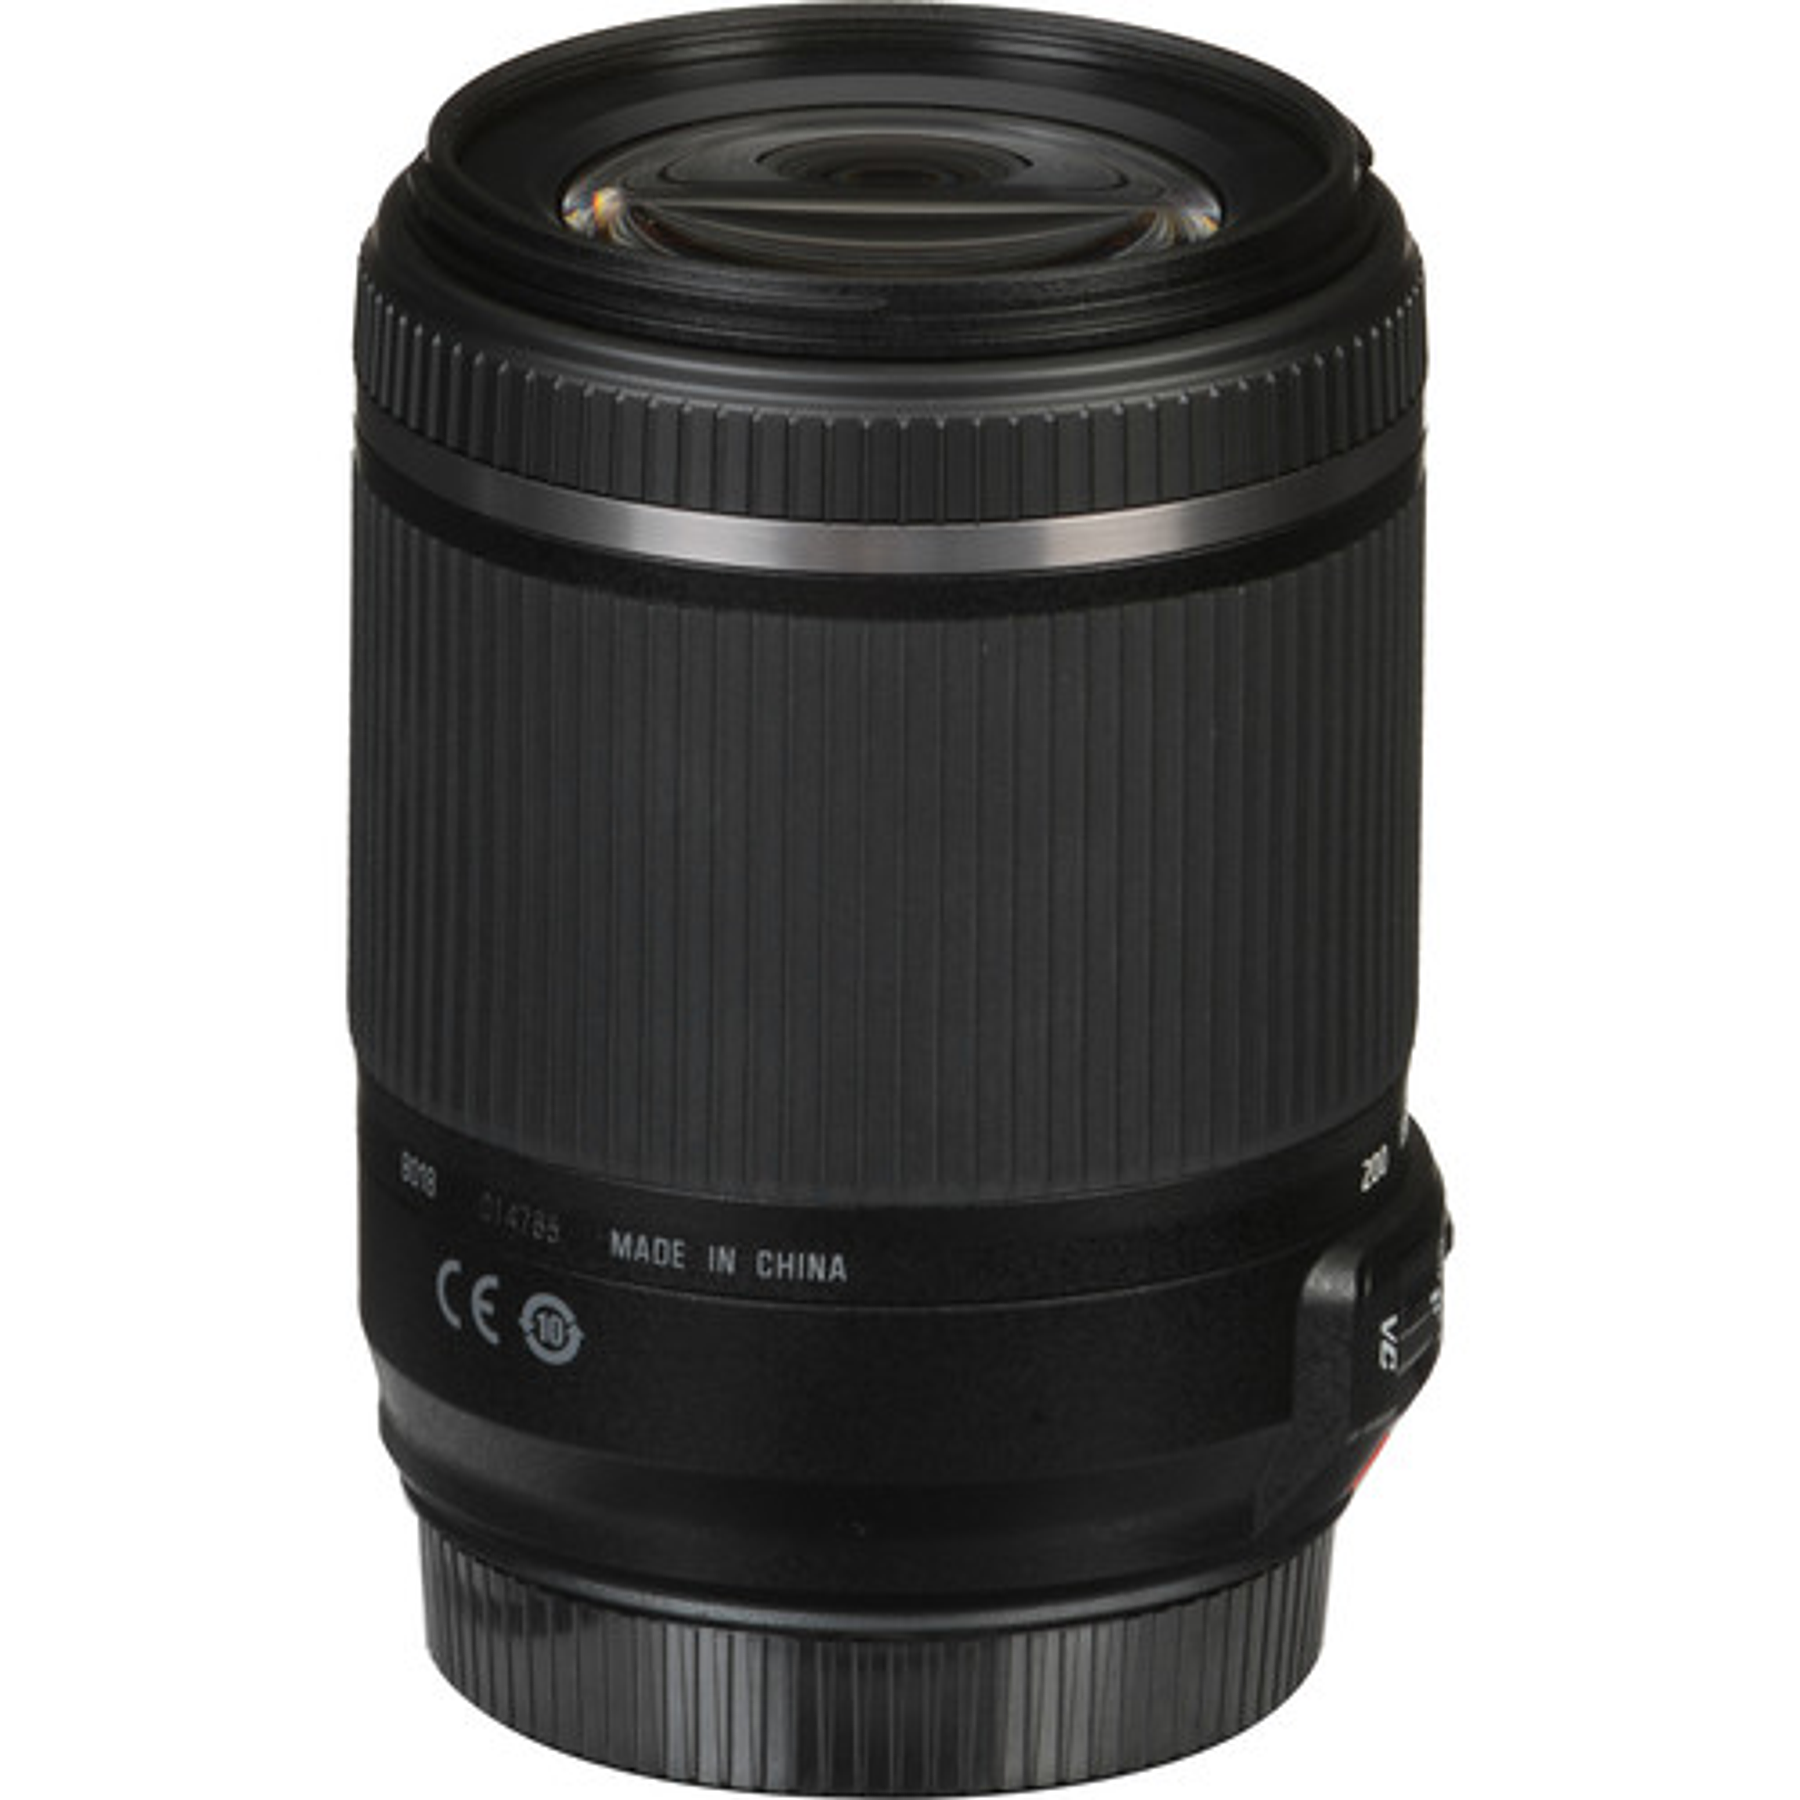 Tamron Lente 18-200mm F/3.5-6.3 Di II VC para Canon/Nikon